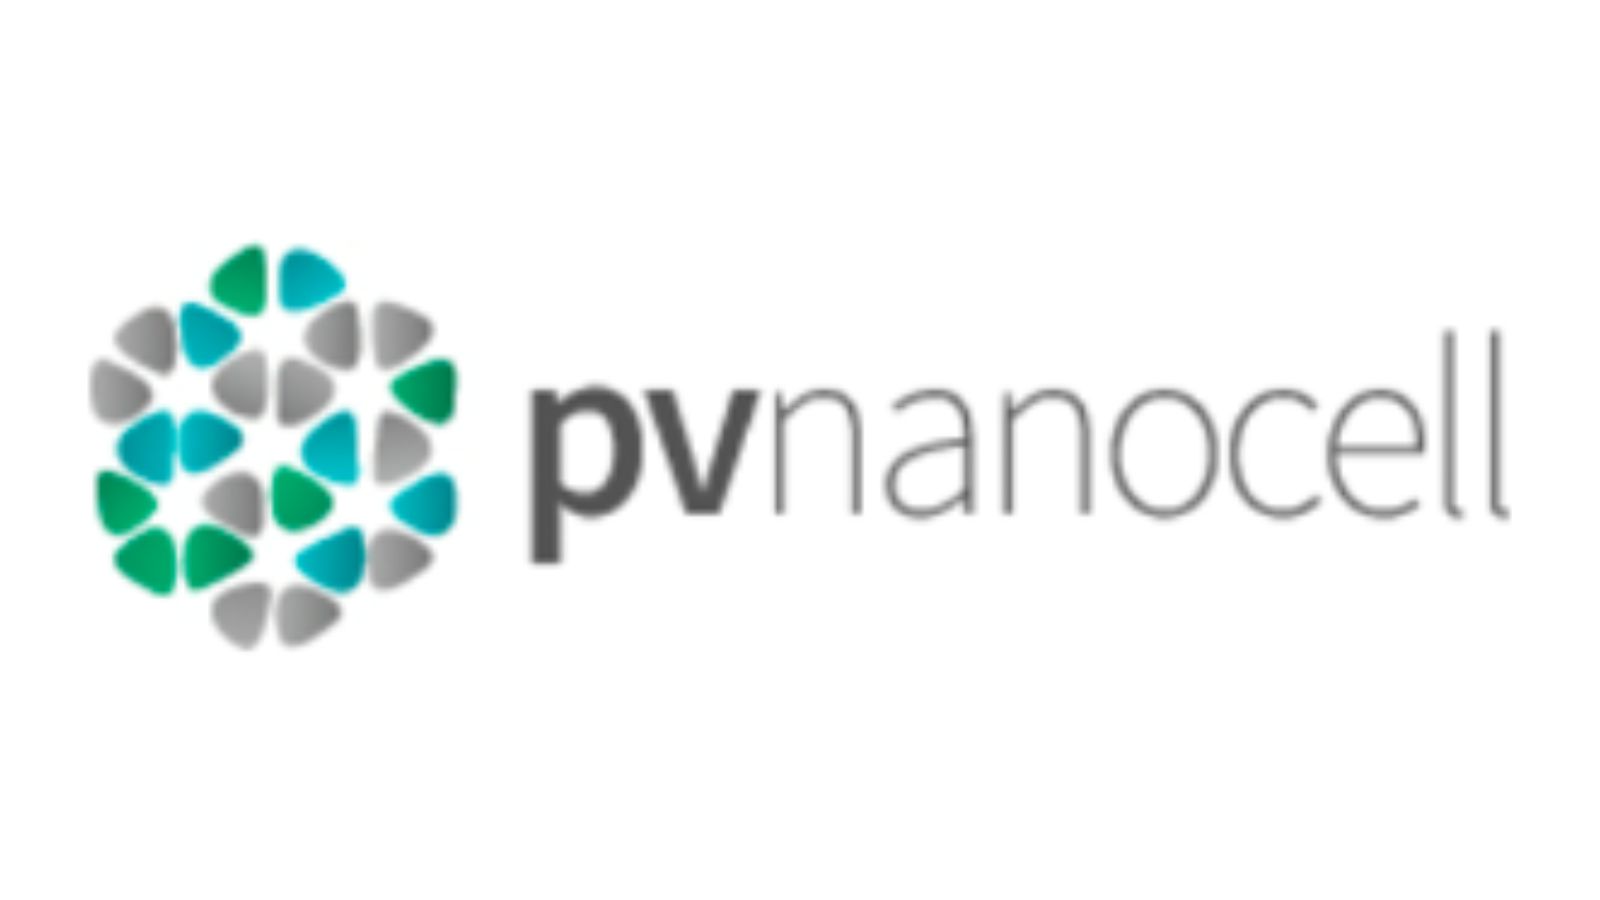 PV Nano Cell（PVN）为大规模生产基于喷墨印刷的电子产品提供了完整解决方案。